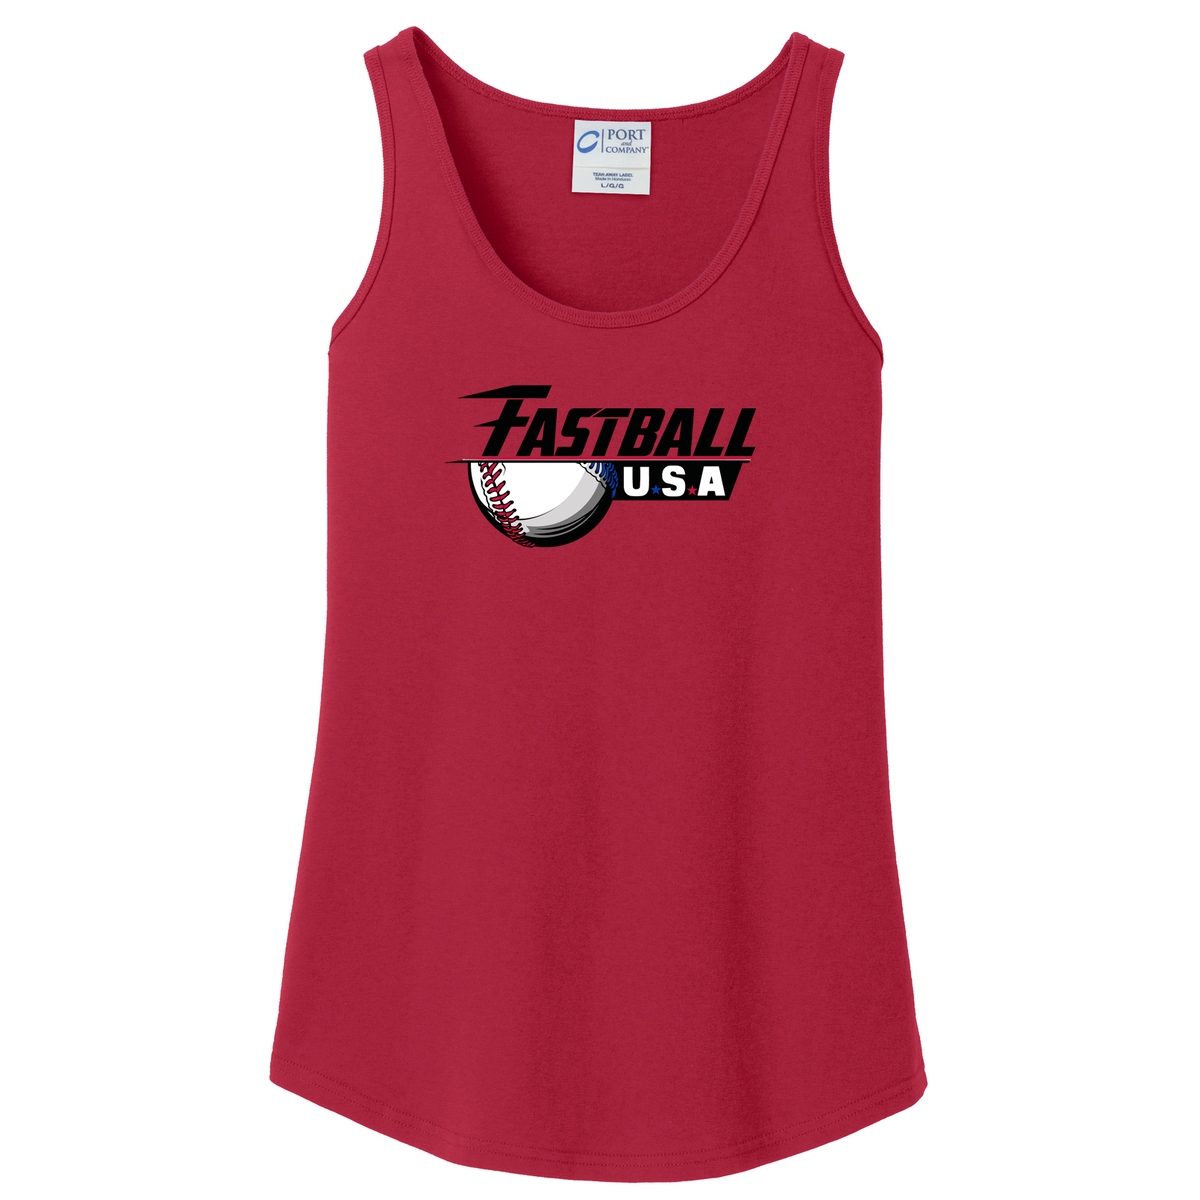 Fastball USA Academy Baseball Women's Tank Top